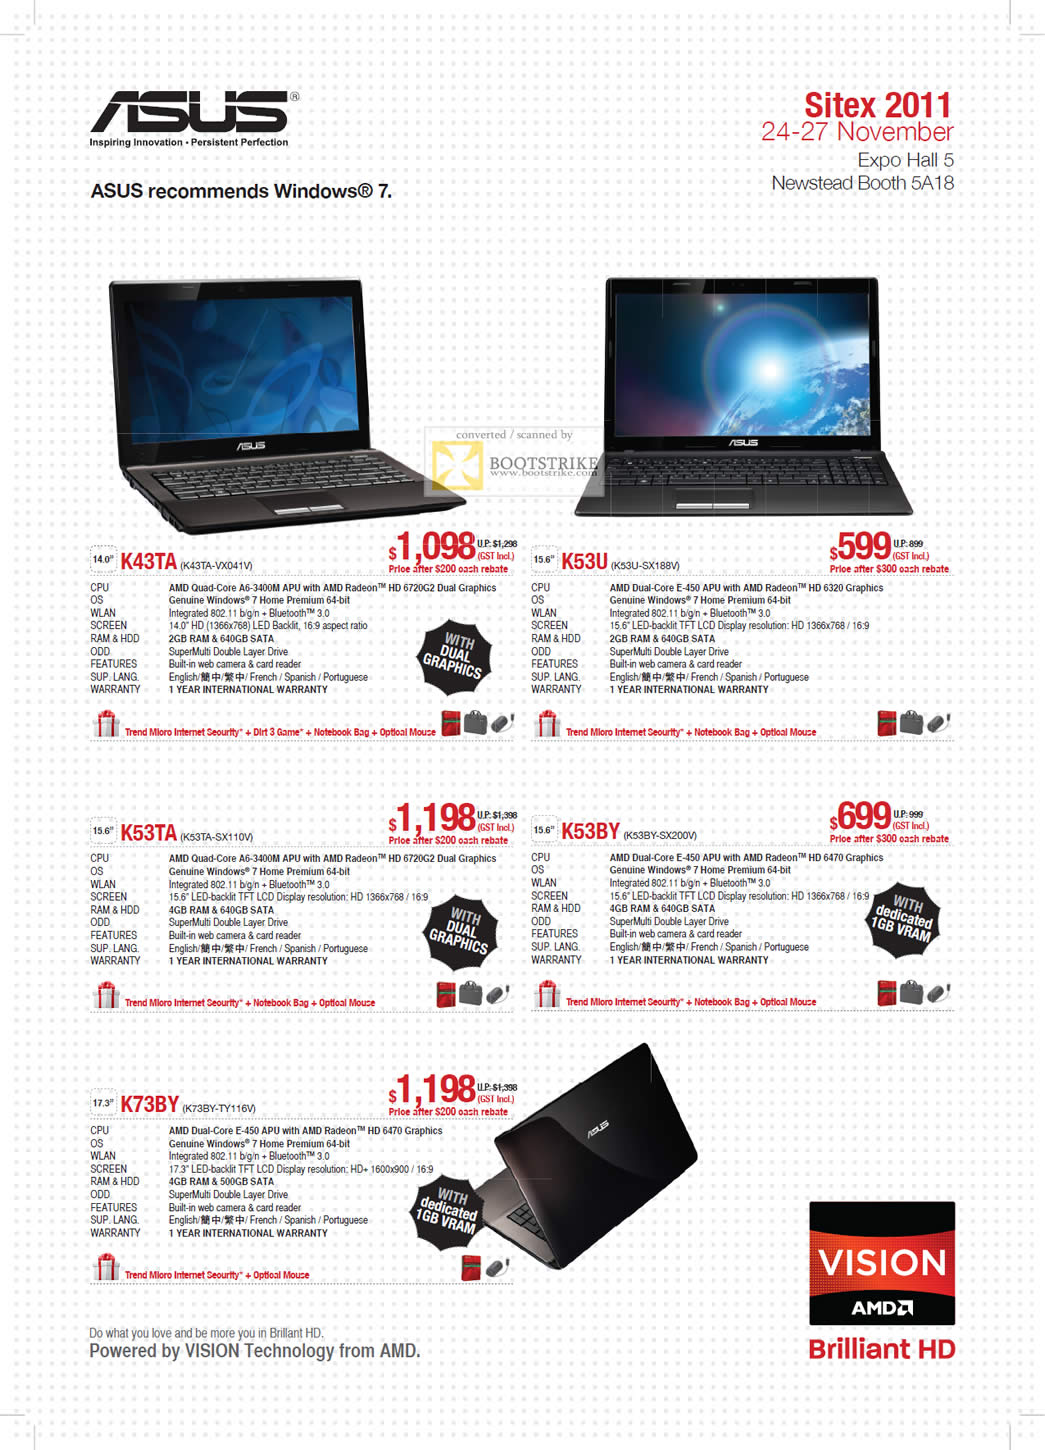 SITEX 2011 price list image brochure of ASUS Notebooks AMD Vision K43TA-VX041V, K53U,SX188V, K53TA-SX110V, K53BY-SX200V, K73BY-TY116V